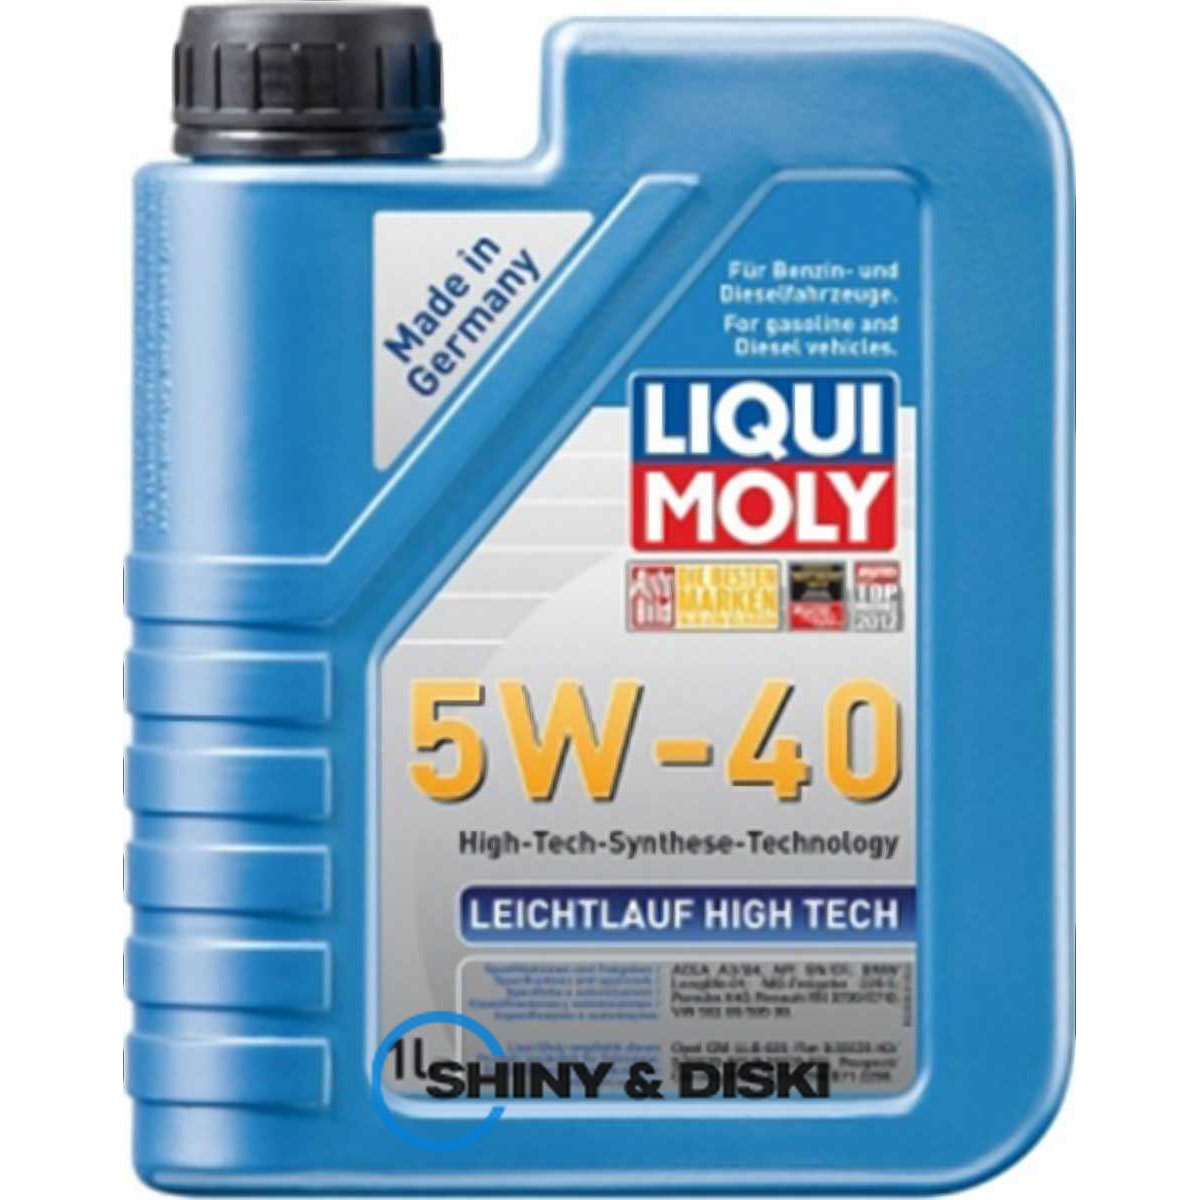 liqui moly leichtlauf high tech